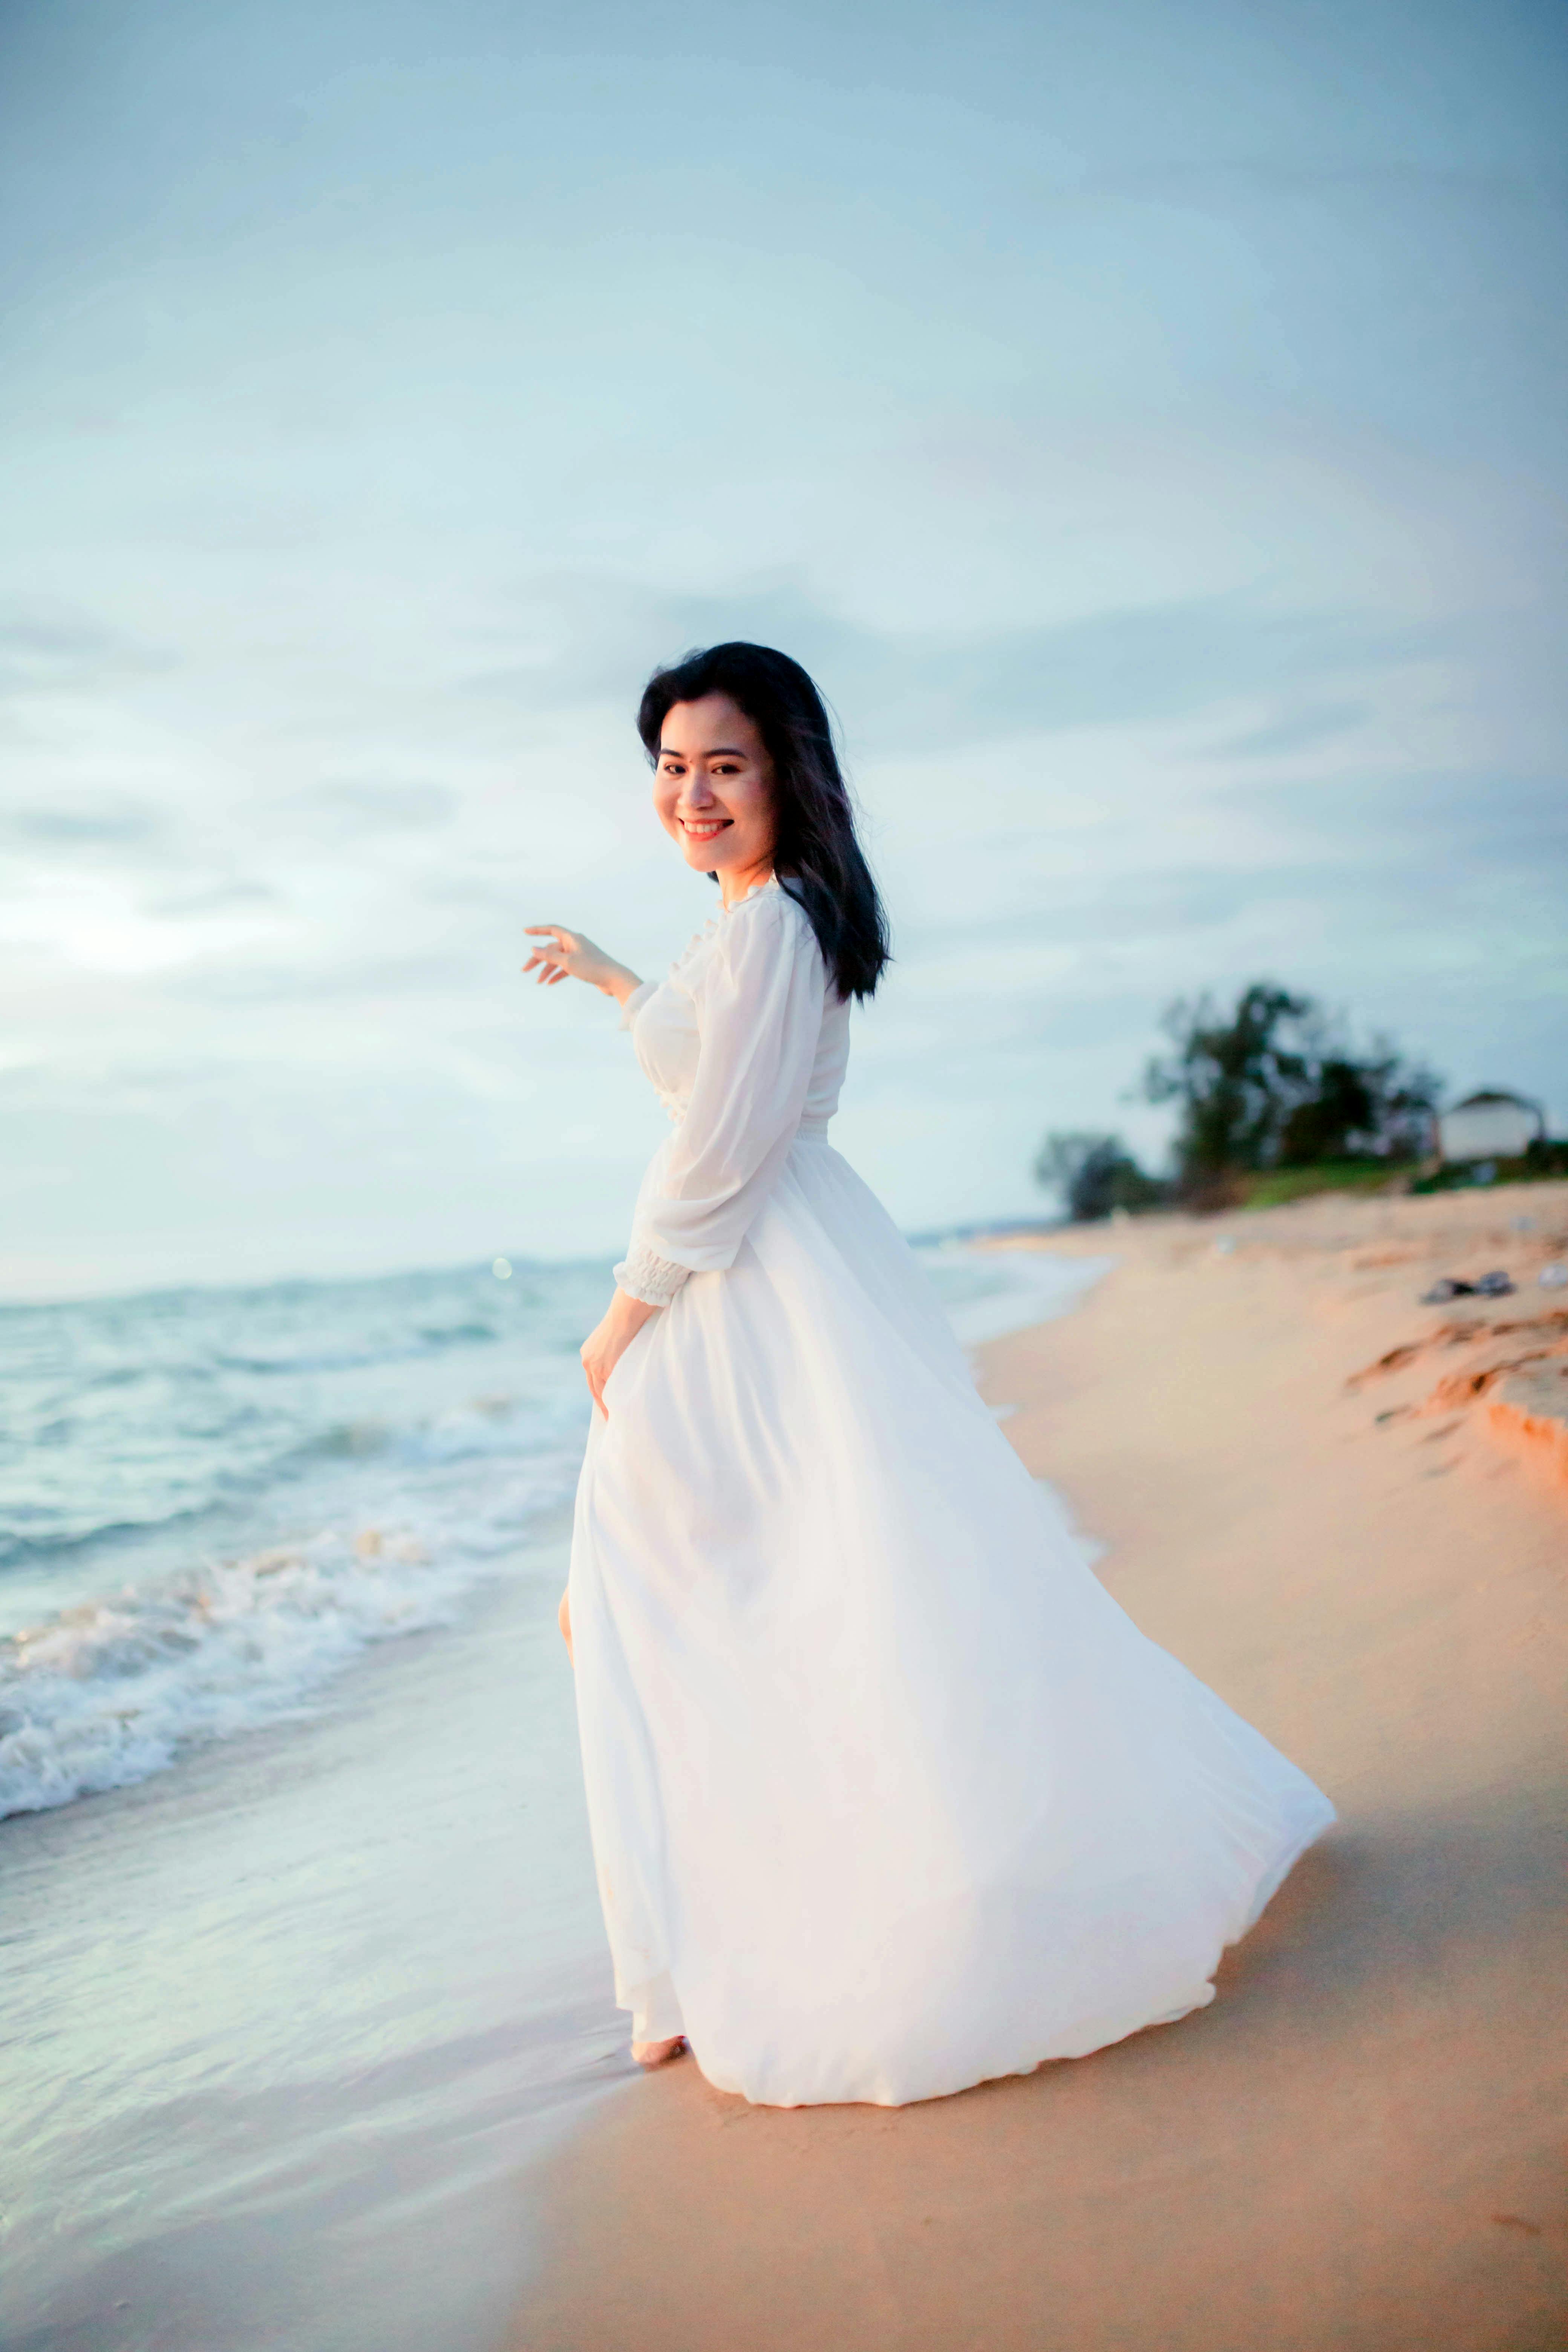 Neked Asian Woman Beach Photos, Download The BEST Free Neked Asian ...